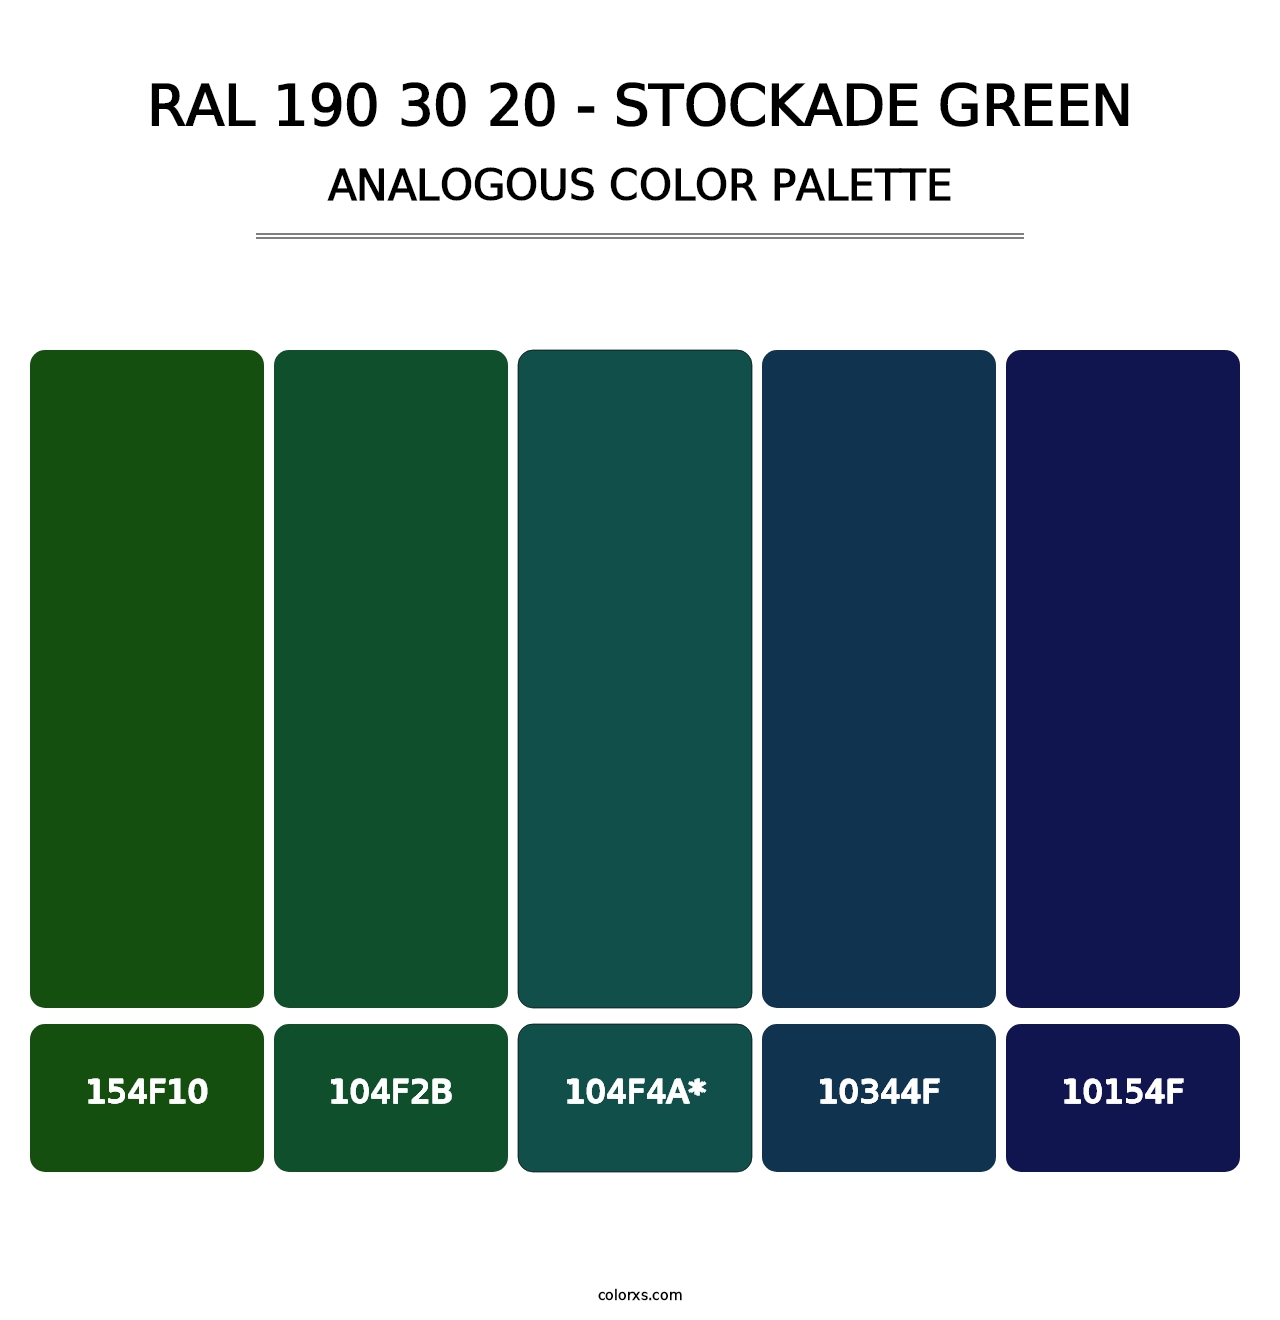 RAL 190 30 20 - Stockade Green - Analogous Color Palette